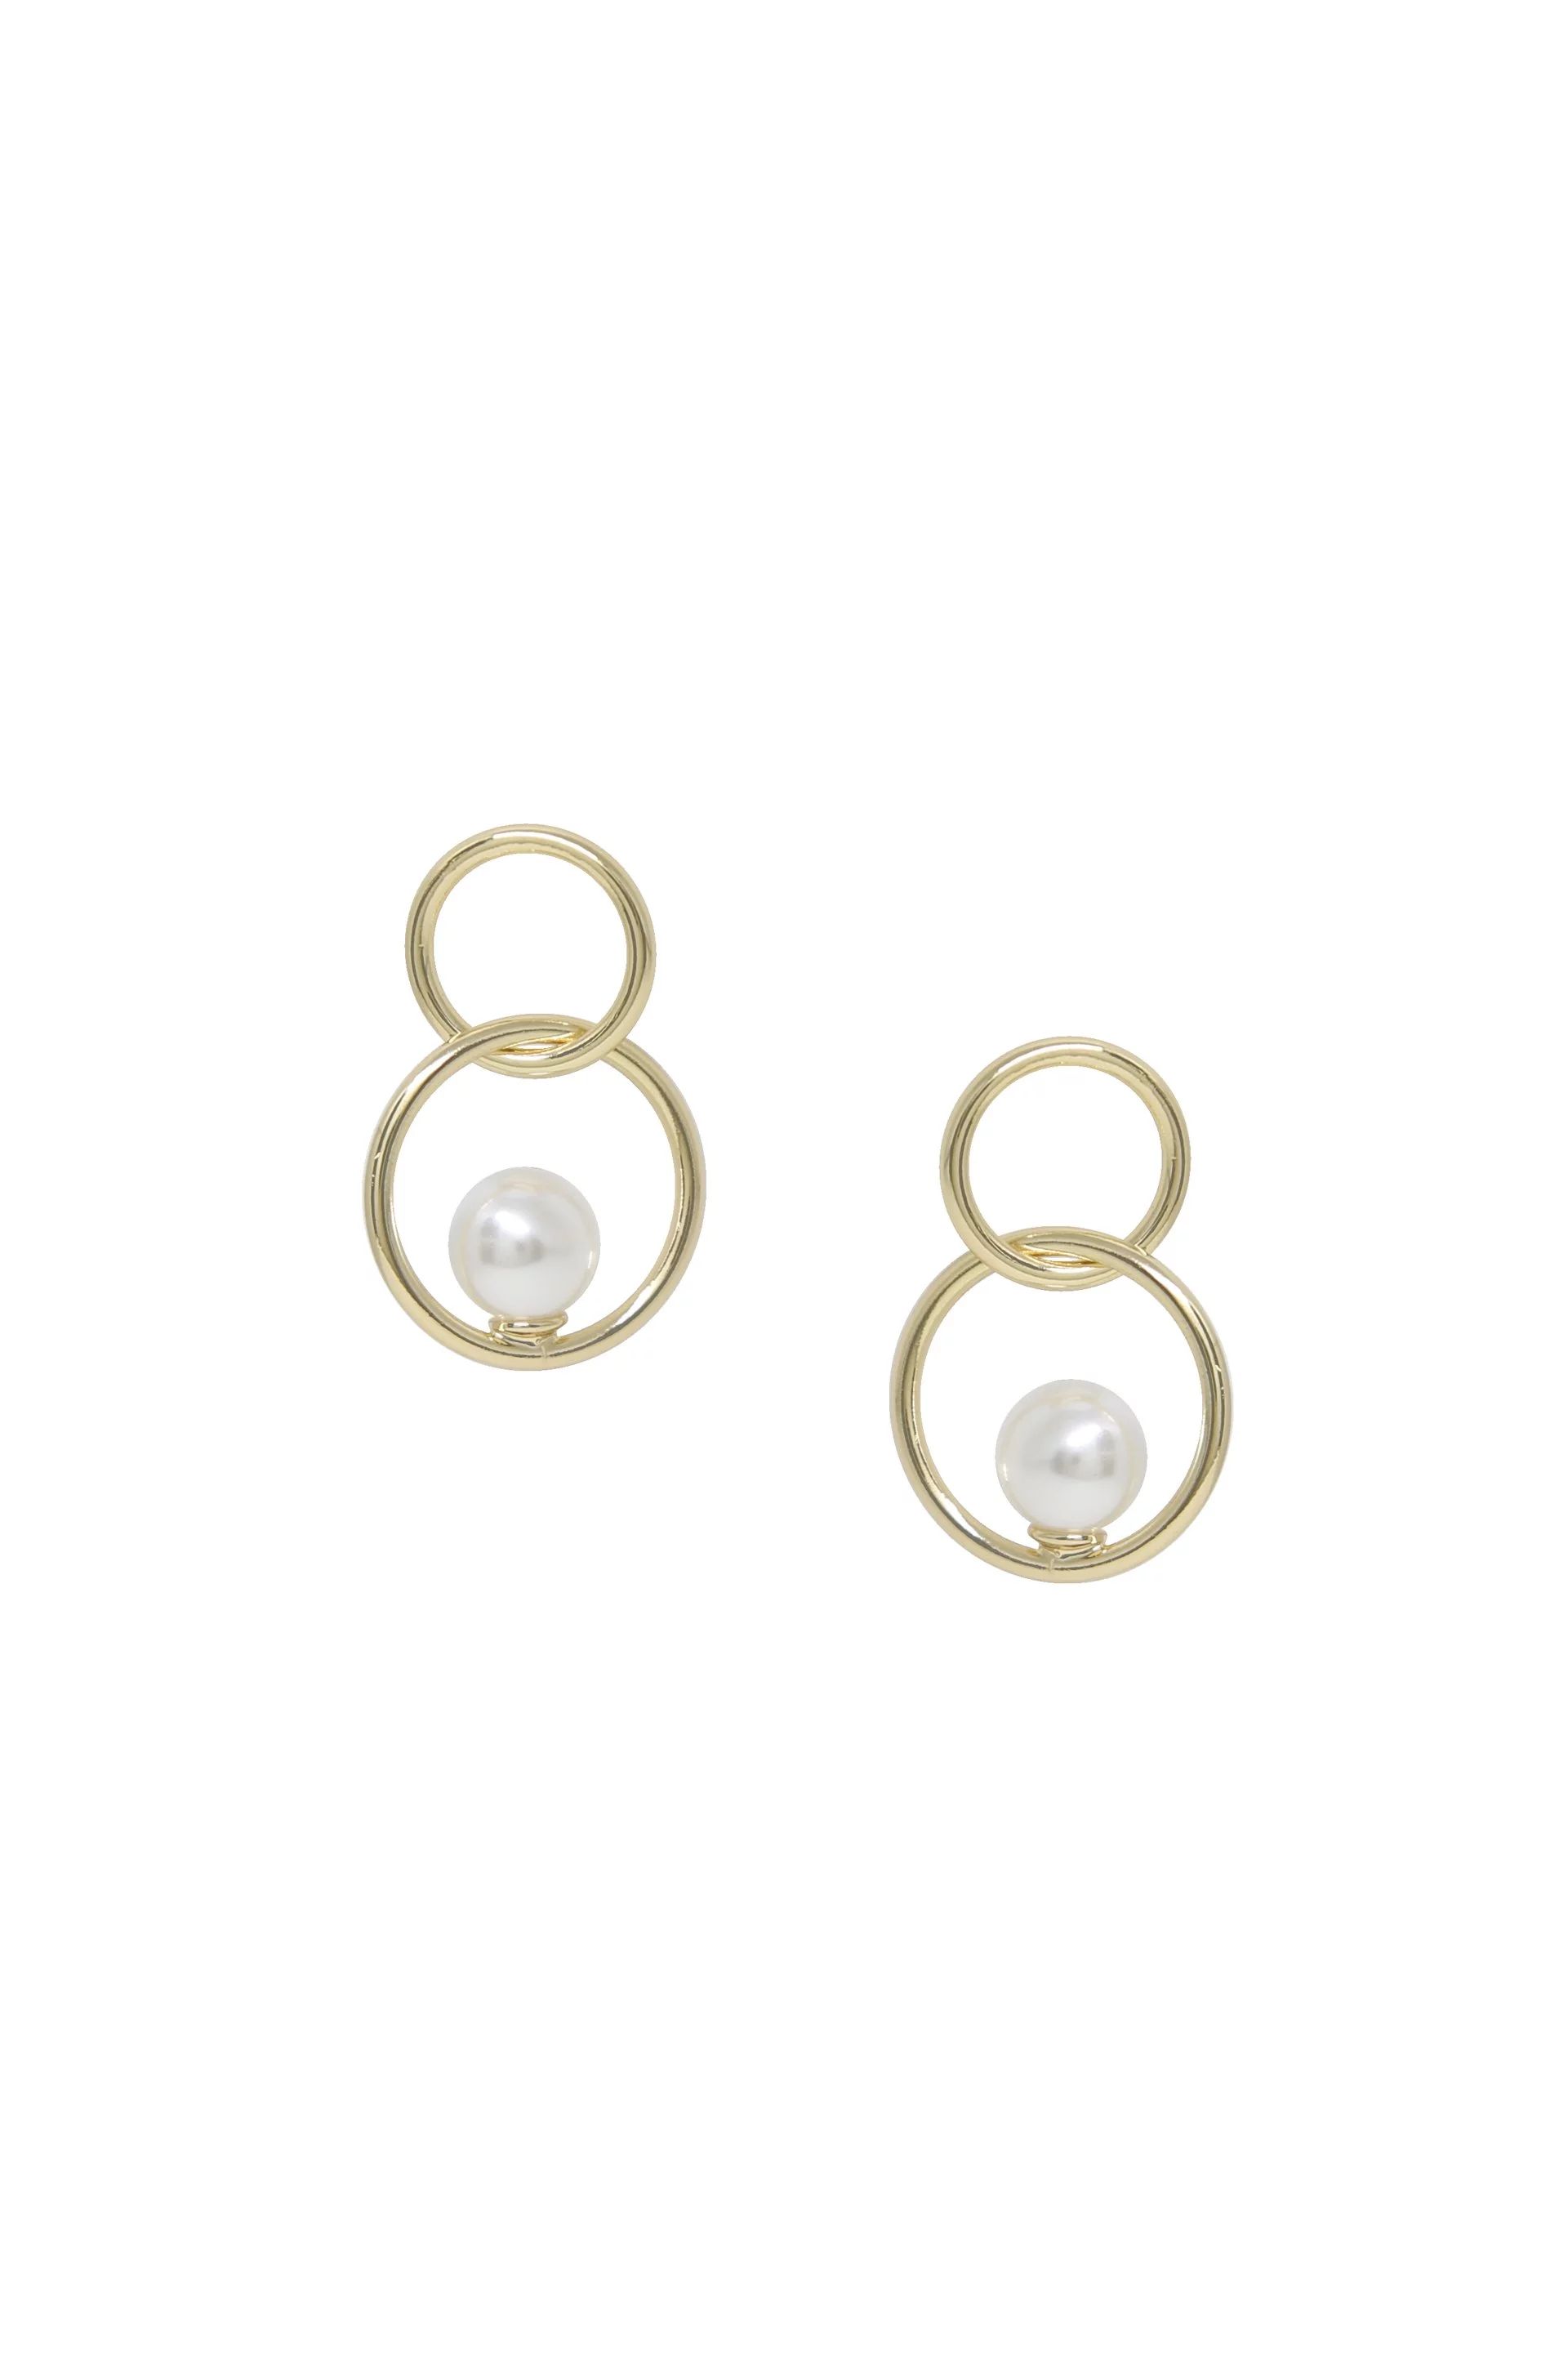 Ettika Women's Small & Delicate Gold Double Ring Stud Earrings with Faux Pearls | Walmart (US)